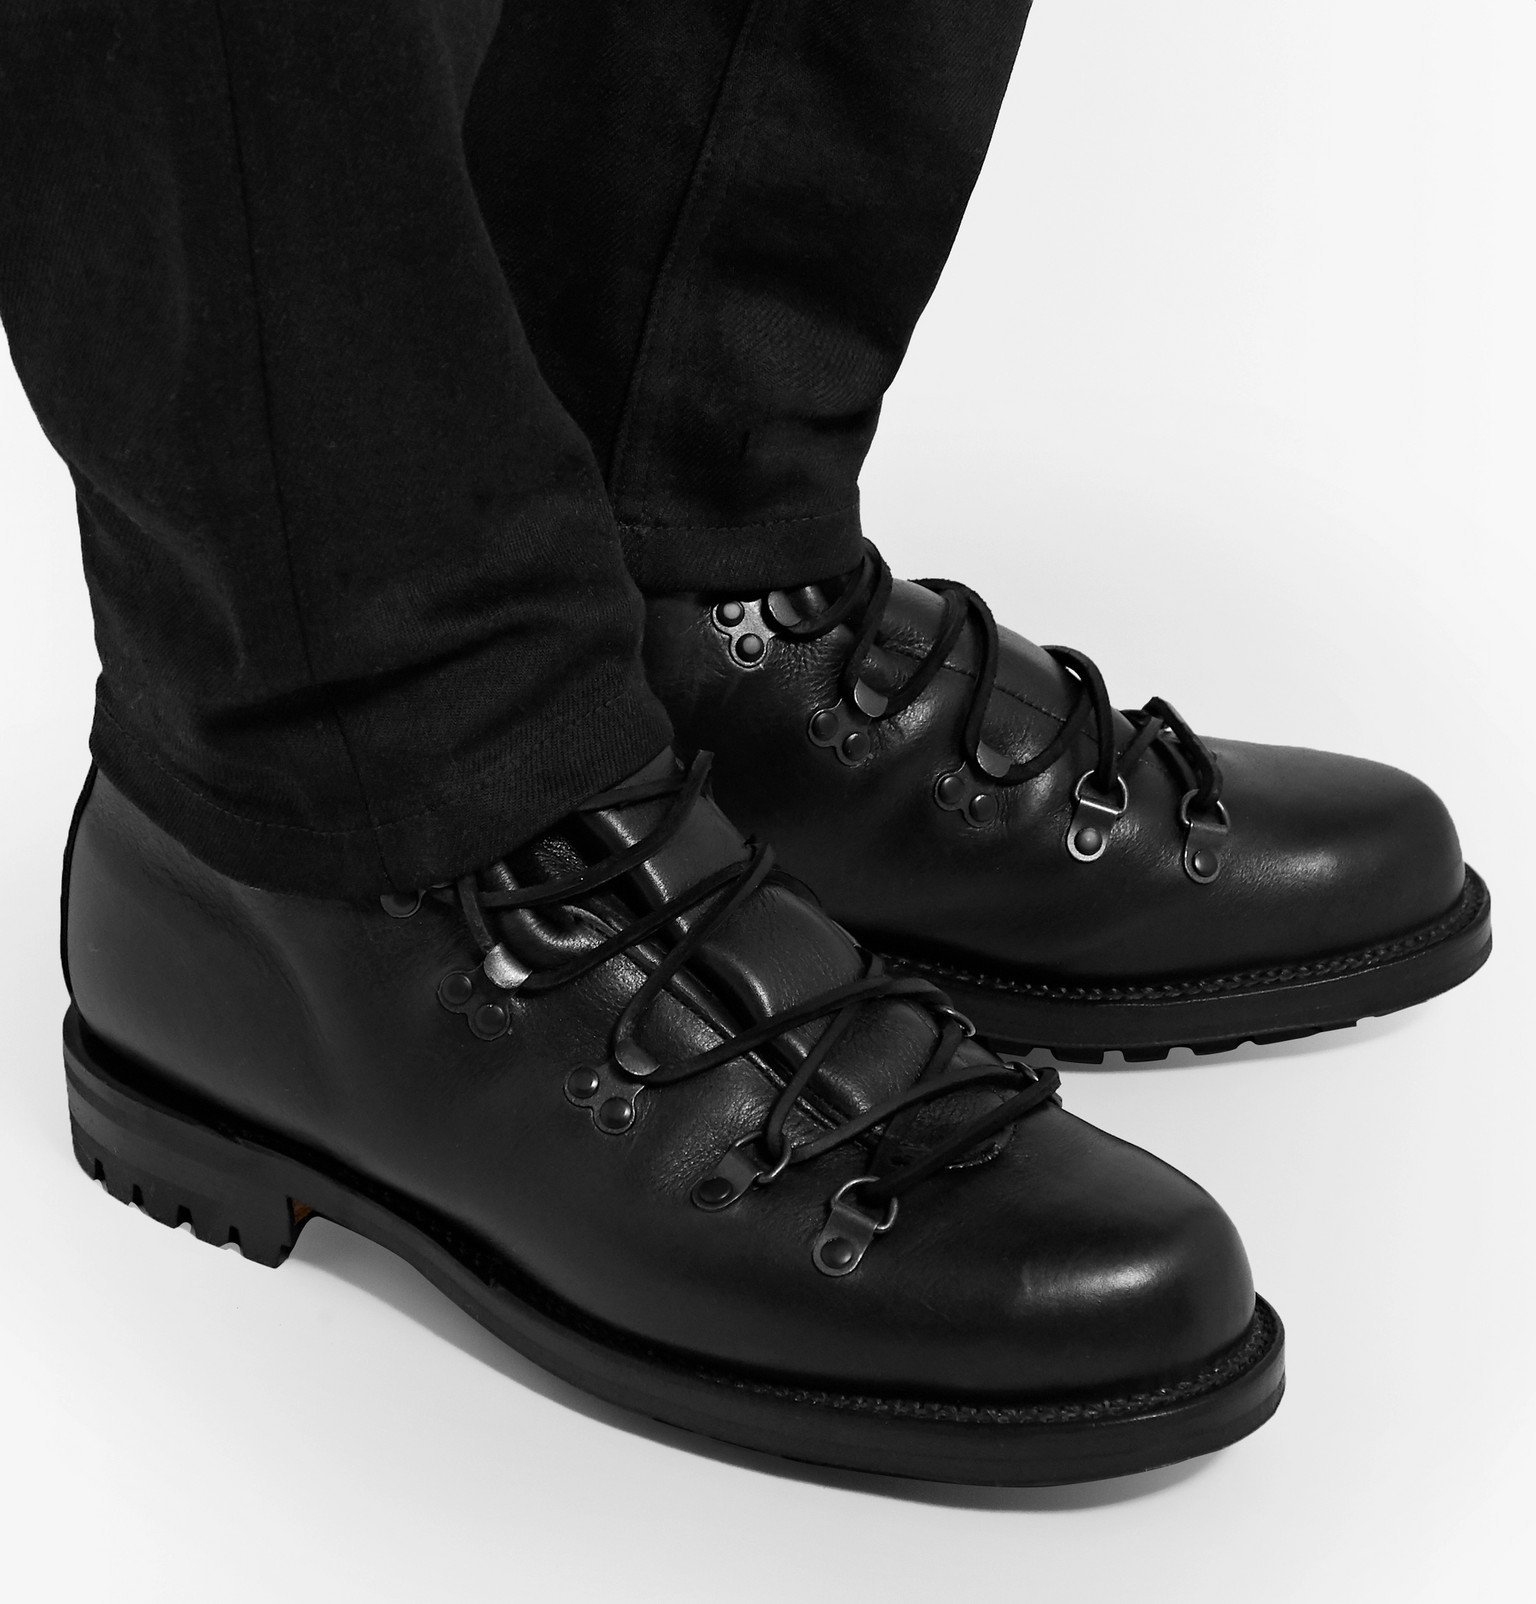 Viberg - Shearling-Lined Leather Hiking Boots - Black Viberg